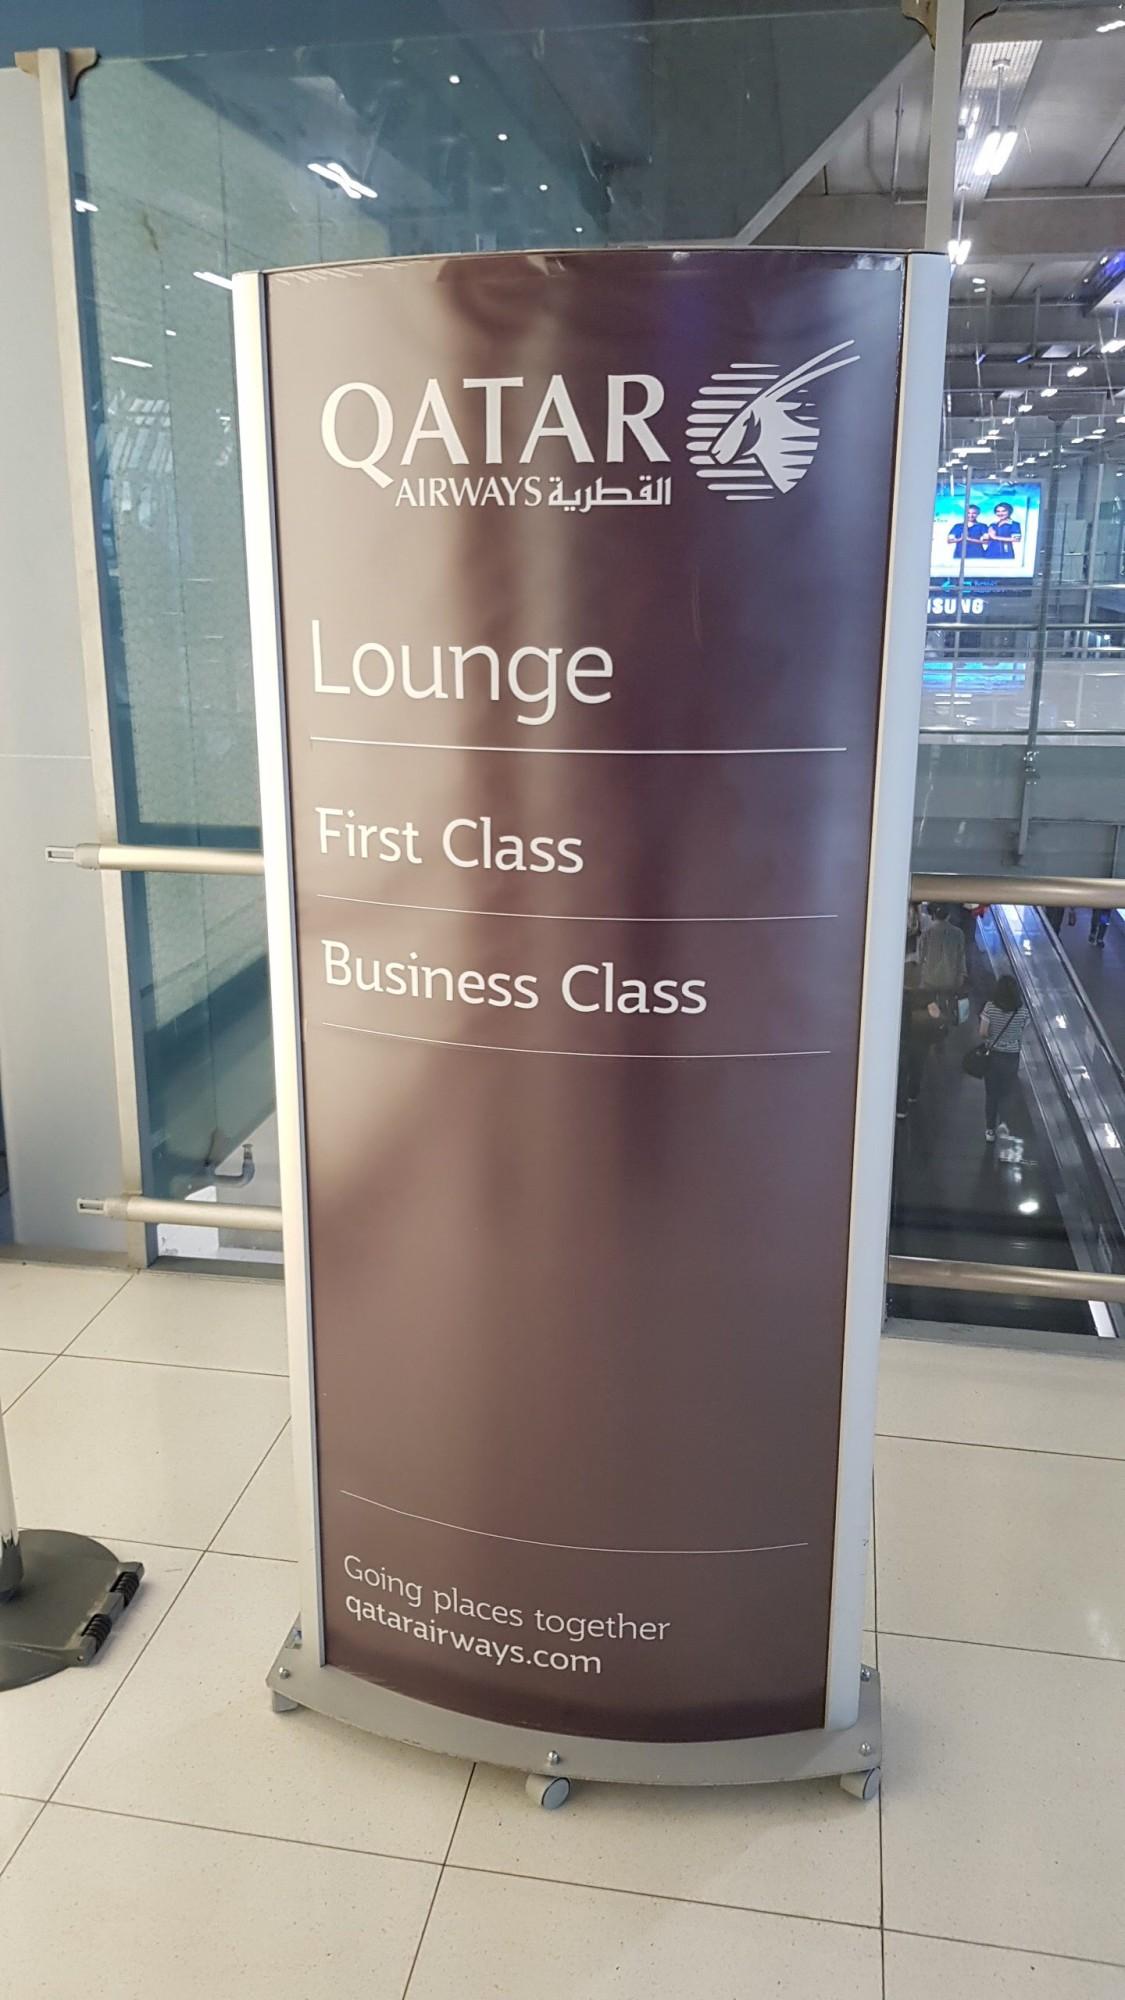 Qatar Airways Premium Lounge image 28 of 52